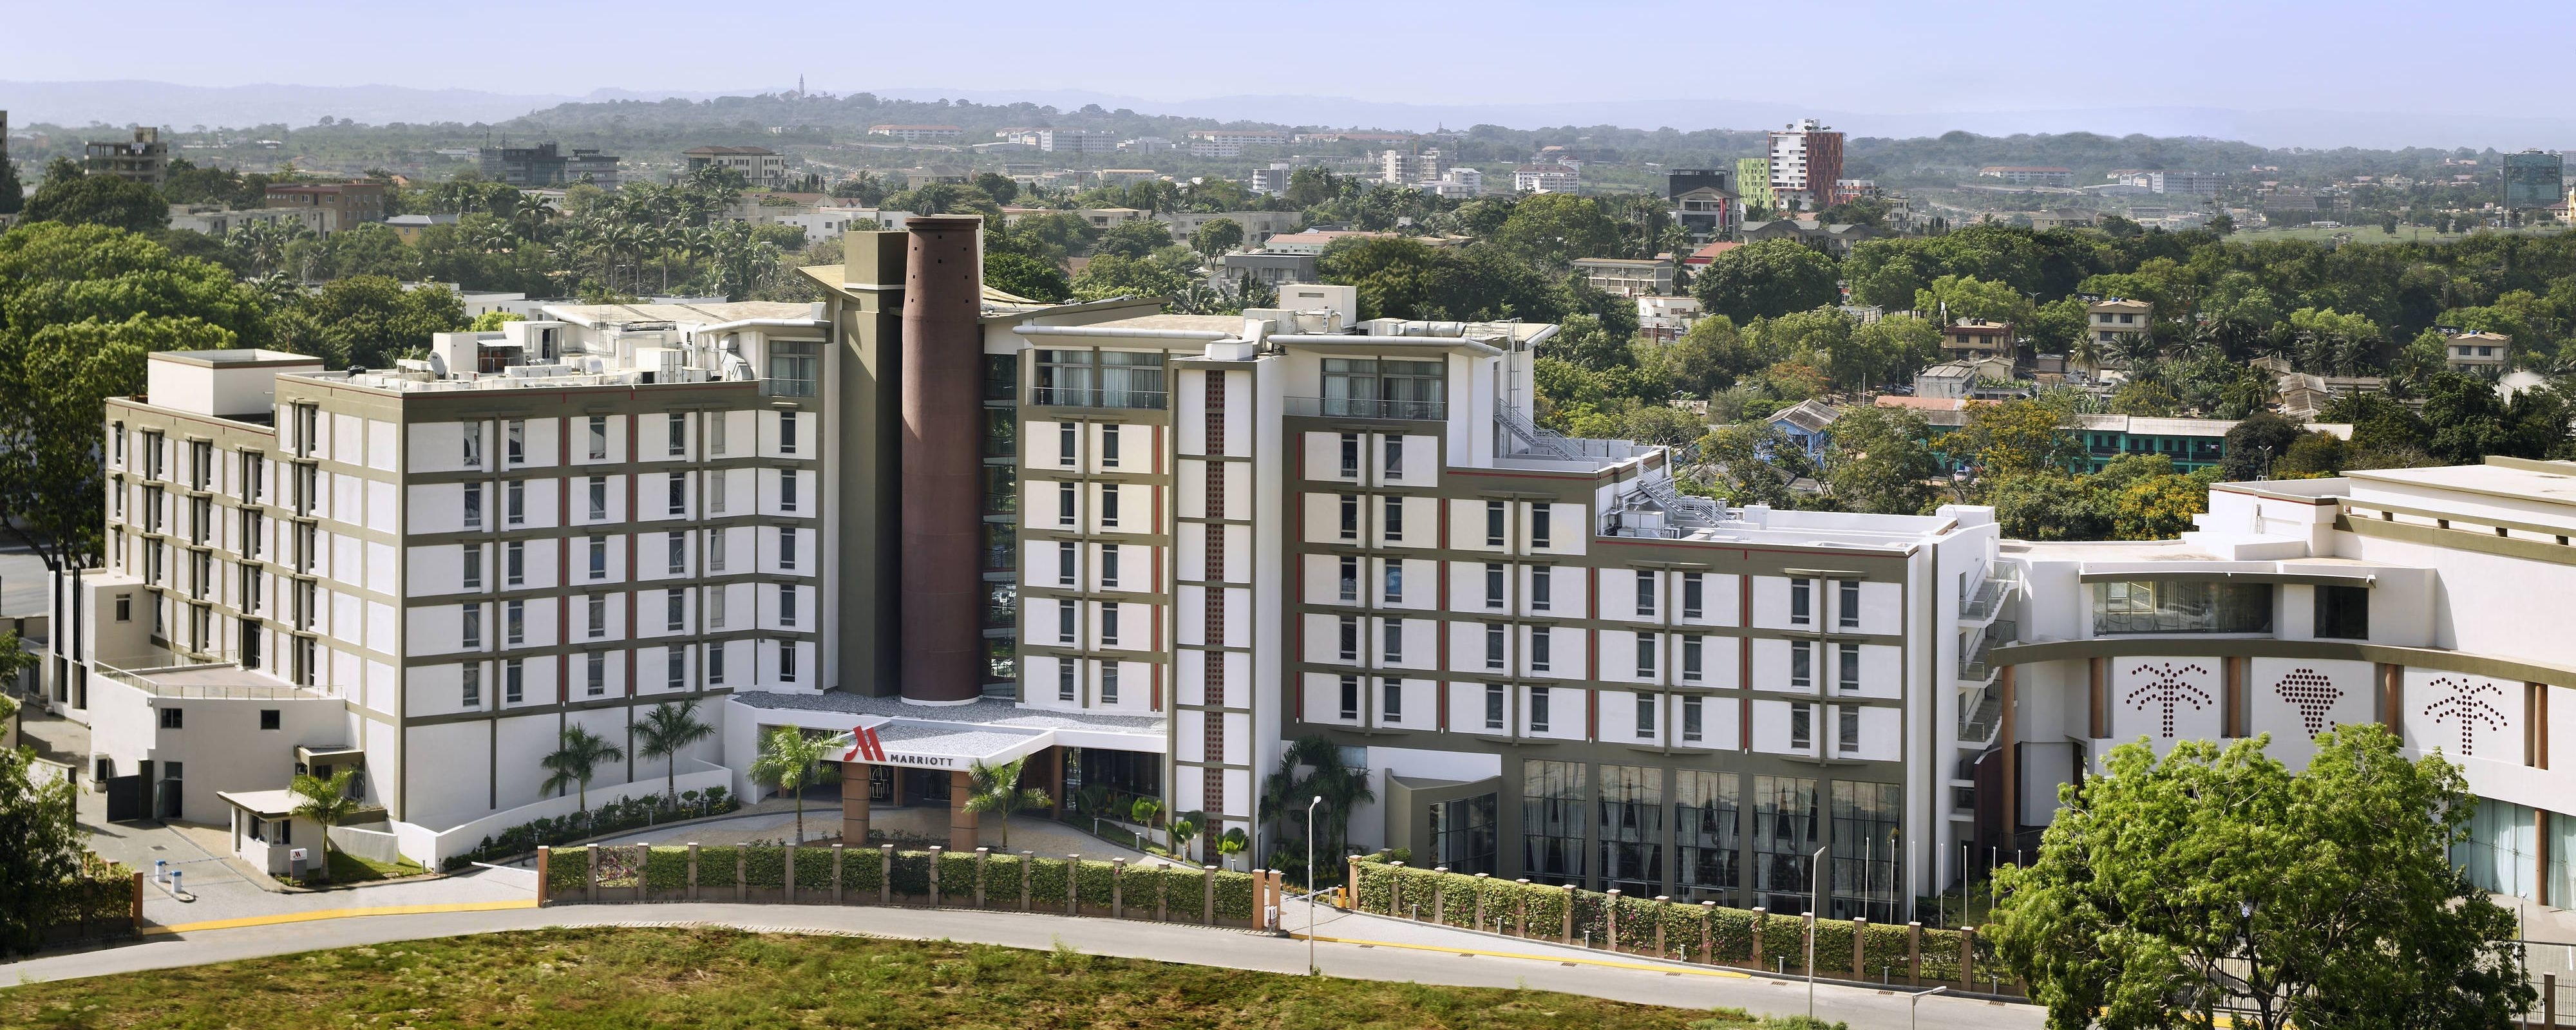 5-star Hotel in Accra, Ghana | Accra Marriott Hotel